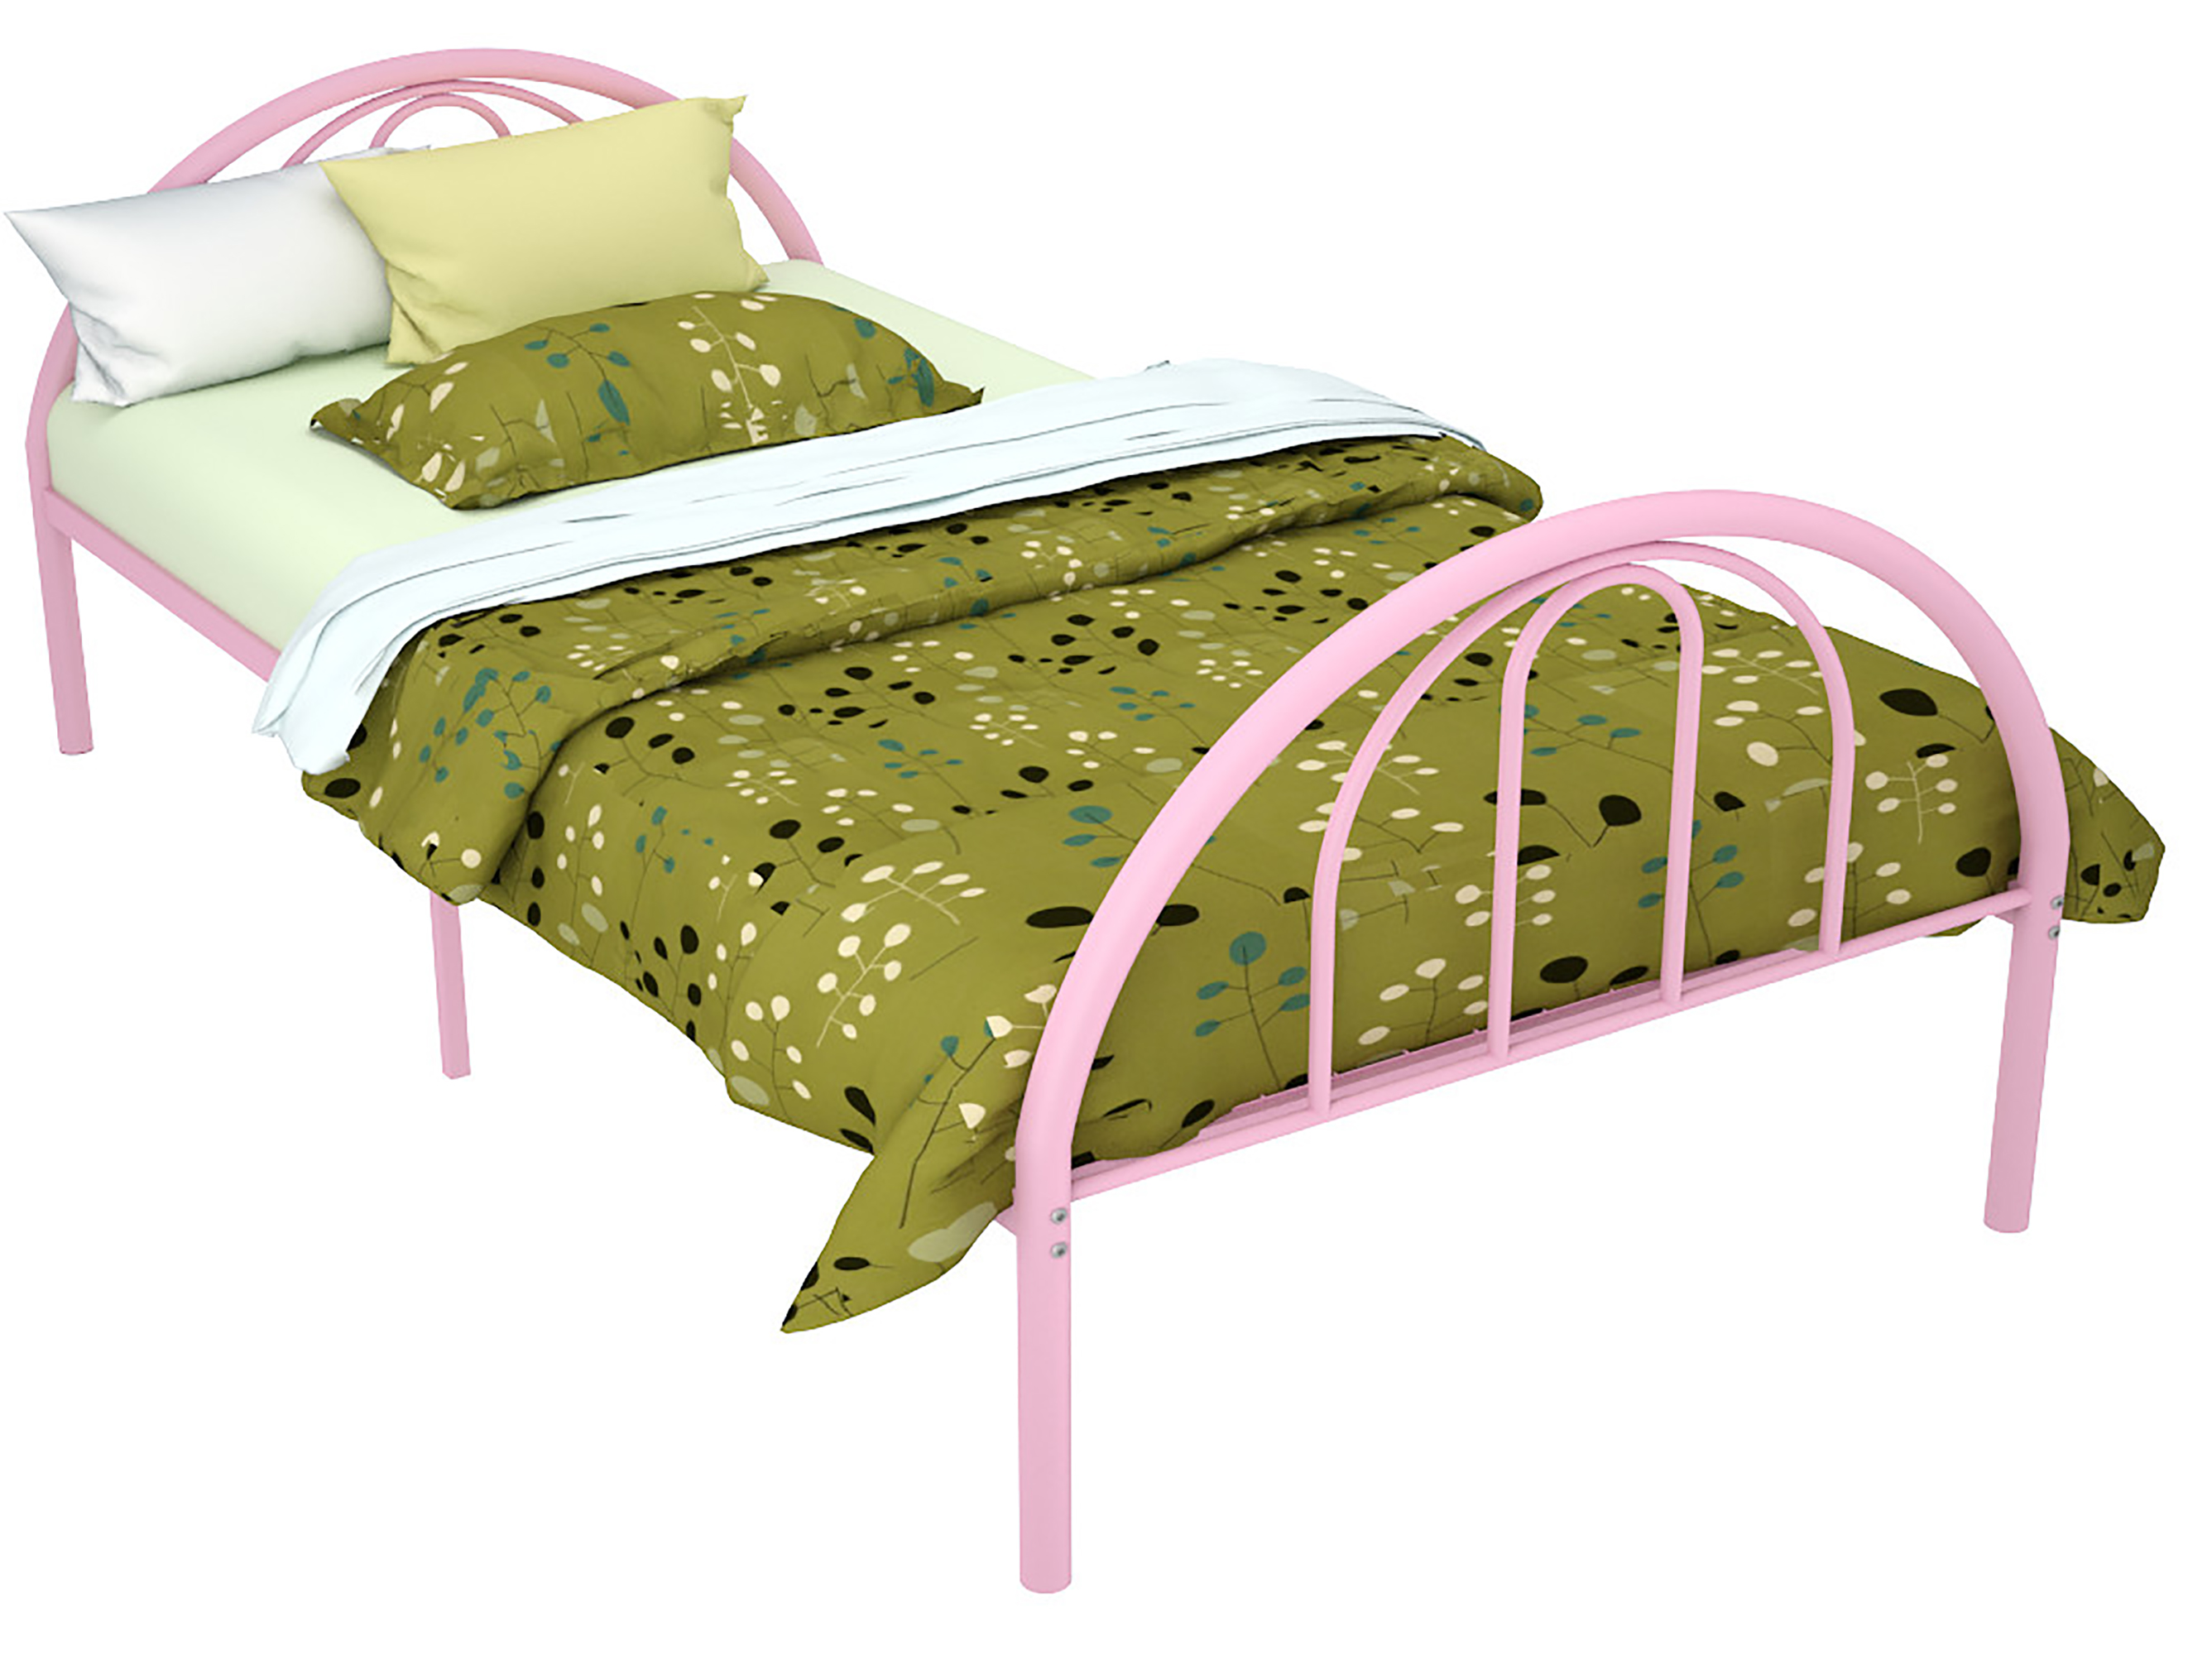 BK Furniture Brooklyn Classic Metal Bed, Twin, Pink - image 3 of 8